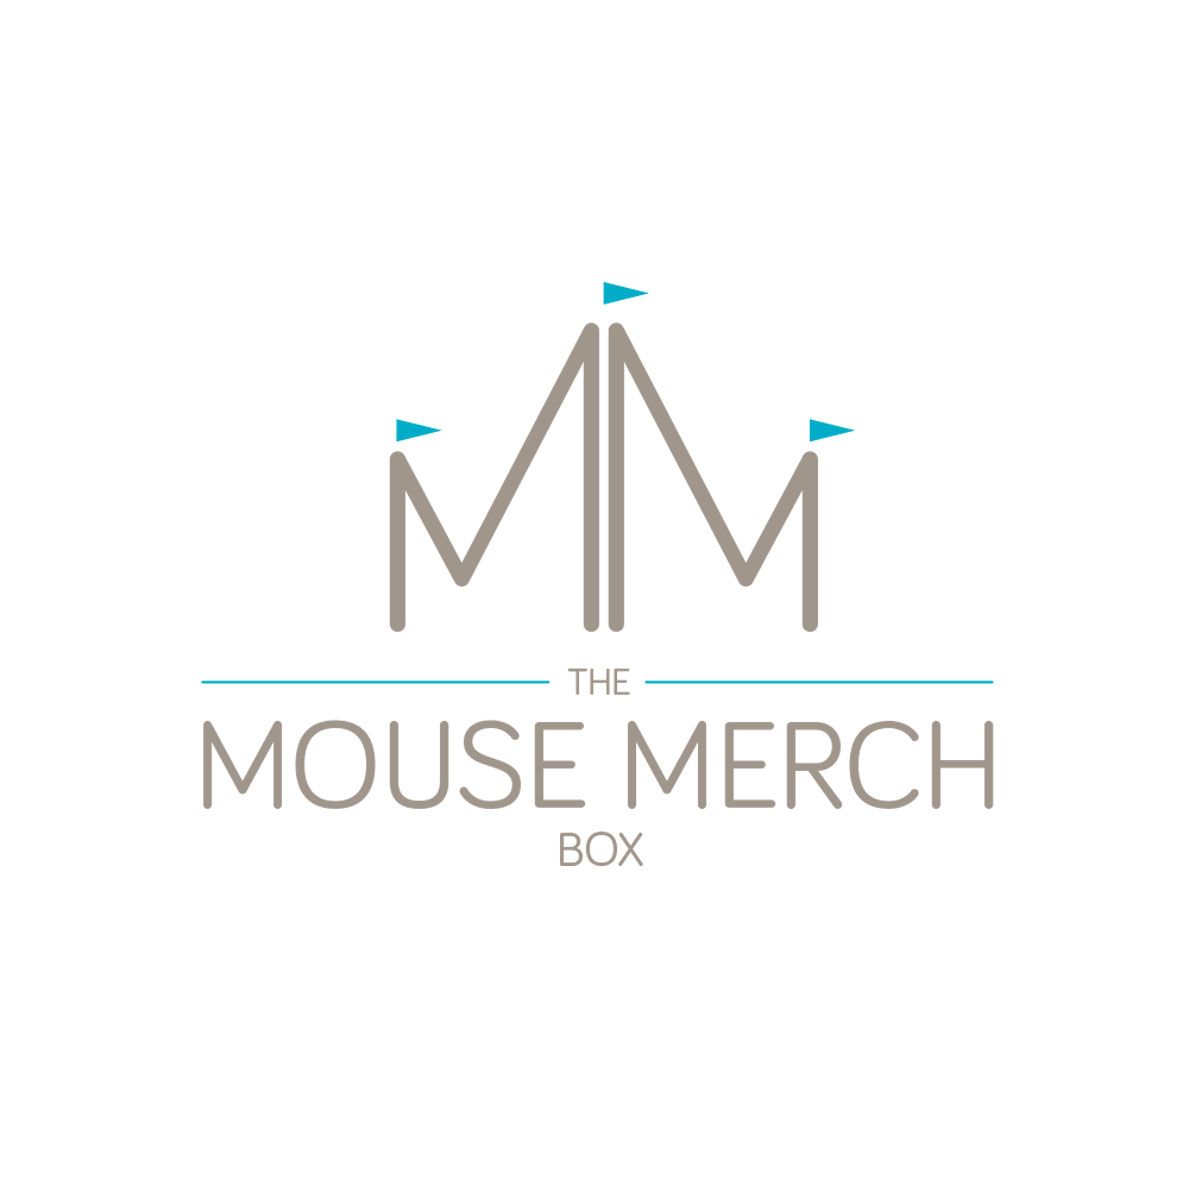 The Mouse Merch Box logo